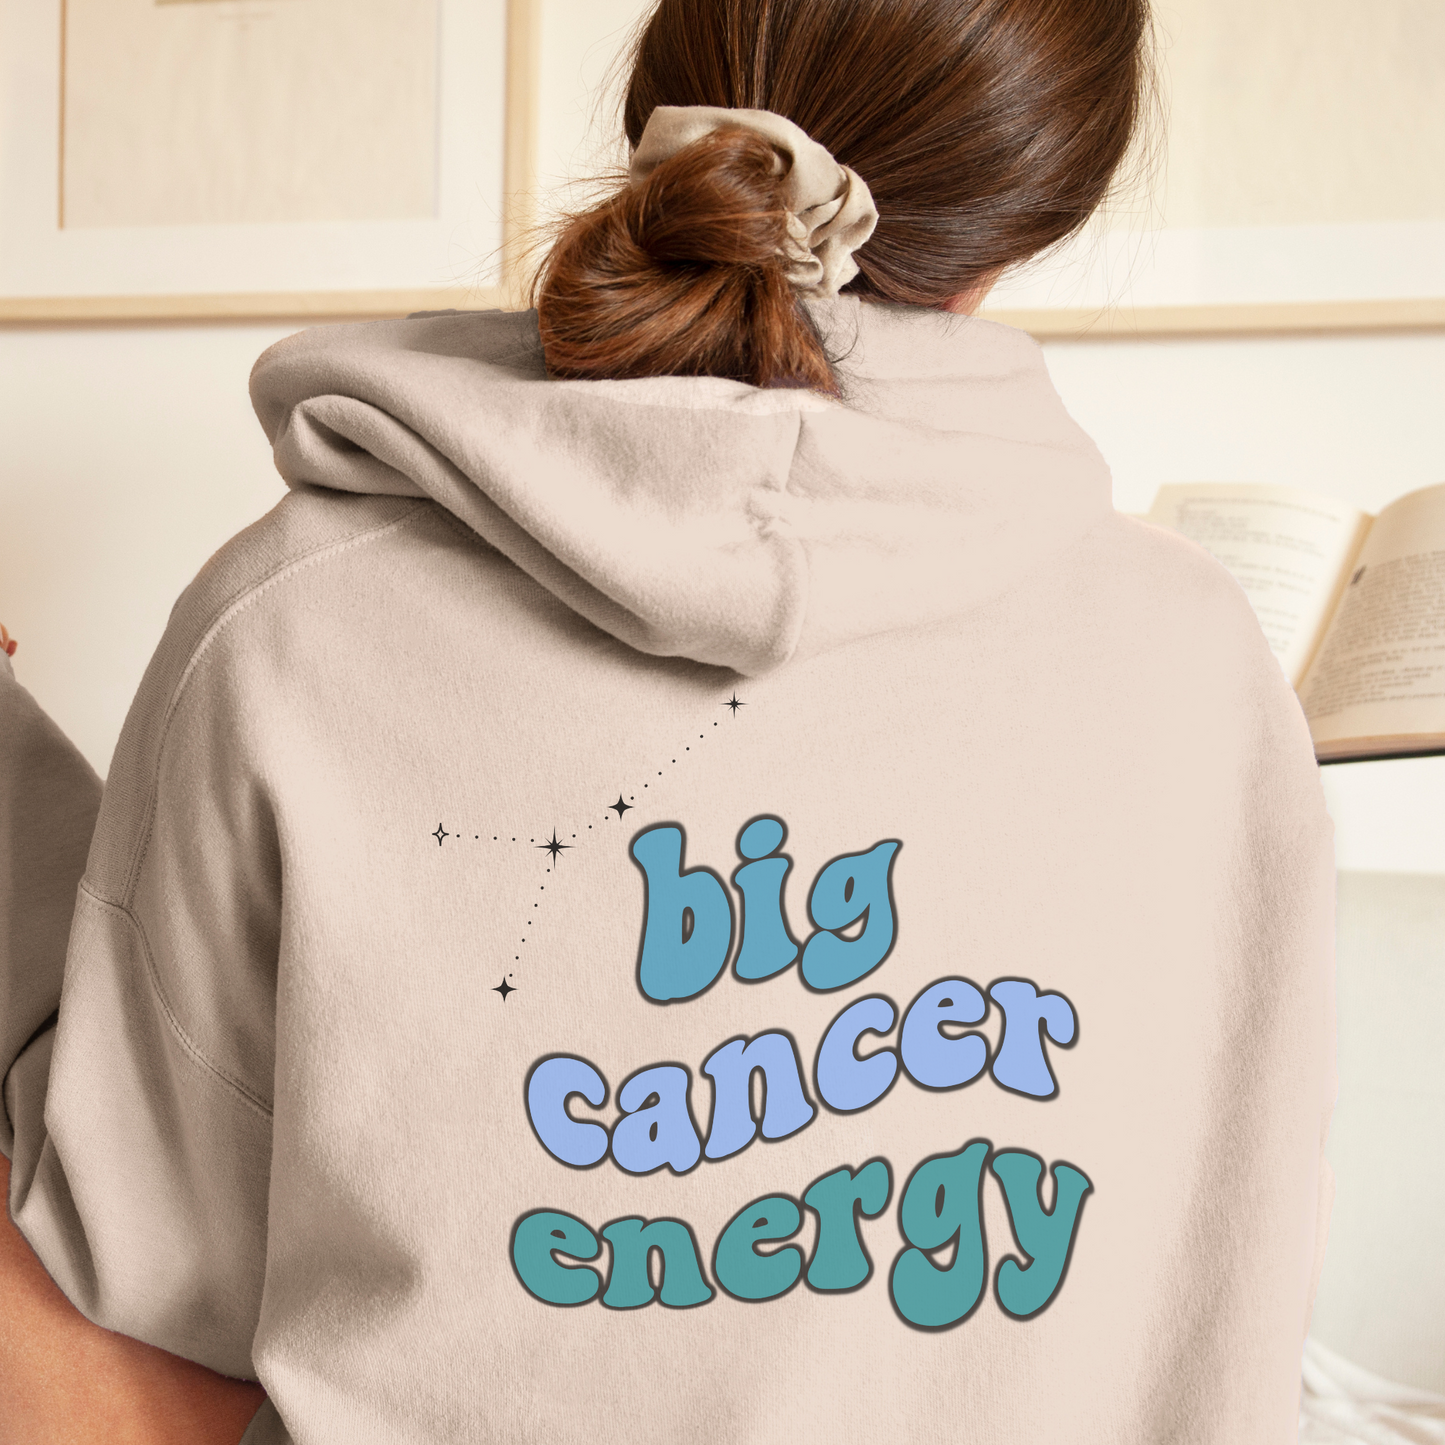 Big Cancer energy Hoodie, Cancer Sweatshirt, Astrology lover gift, Zodiac sweatshirt, Xmas gift for Cancer, Astrology